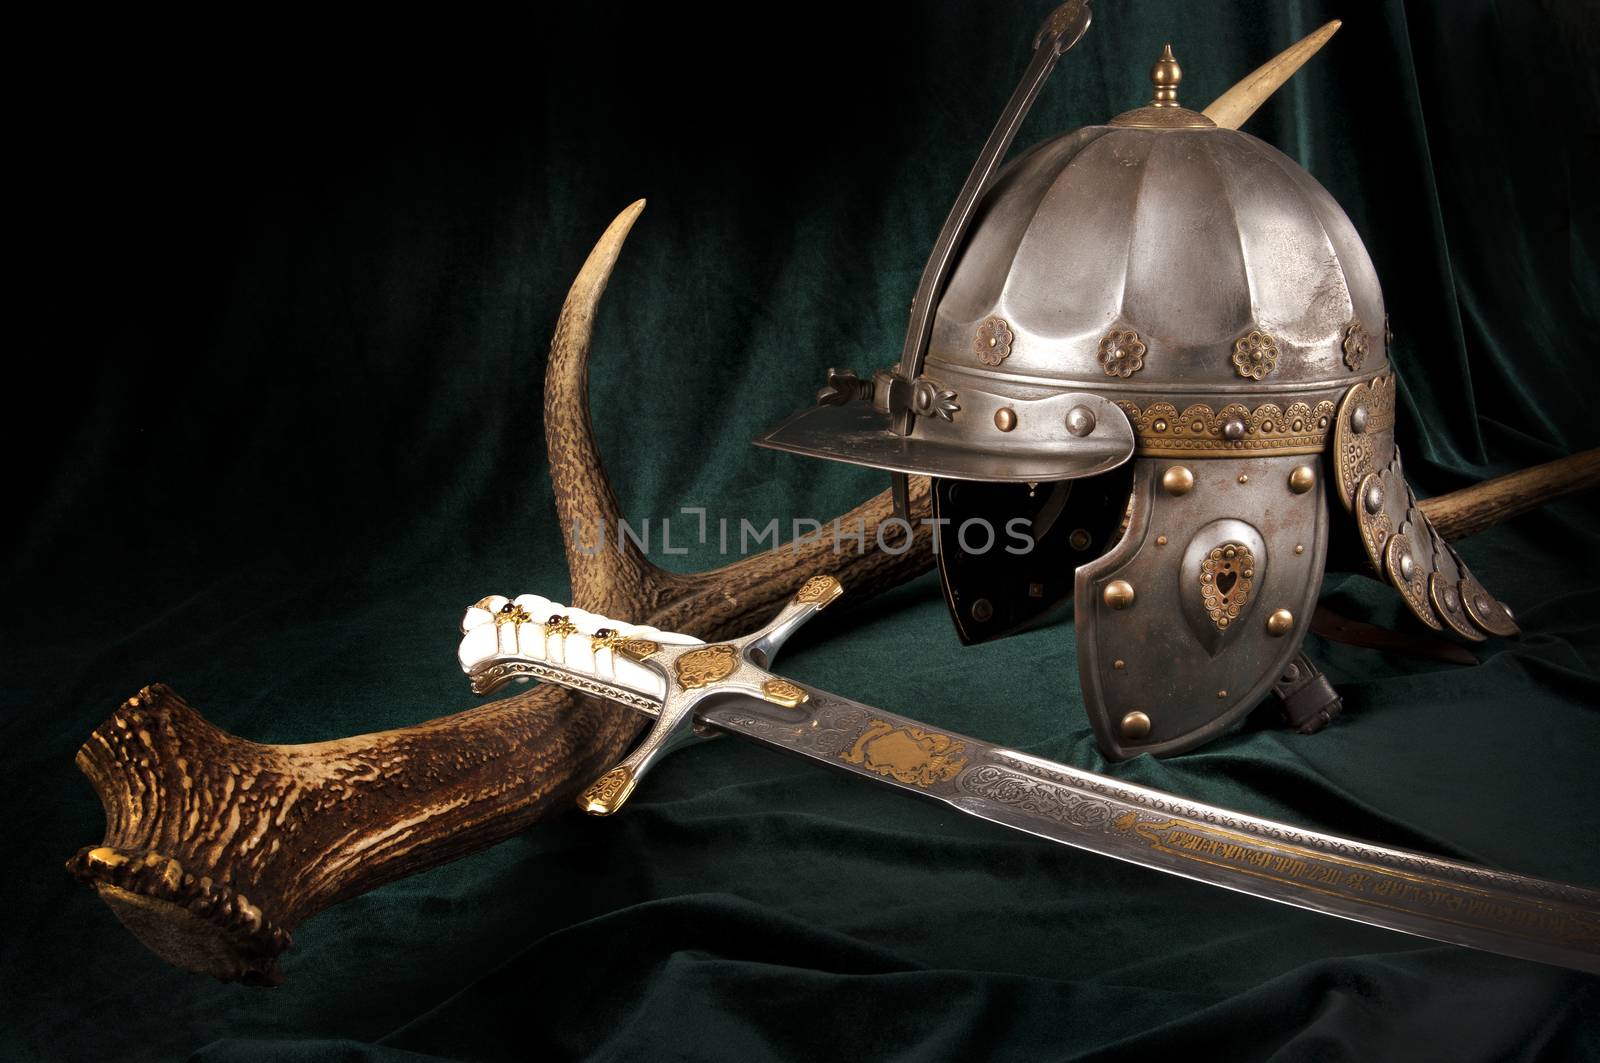 Iron helmet of the medieval knight. Very heavy headdress